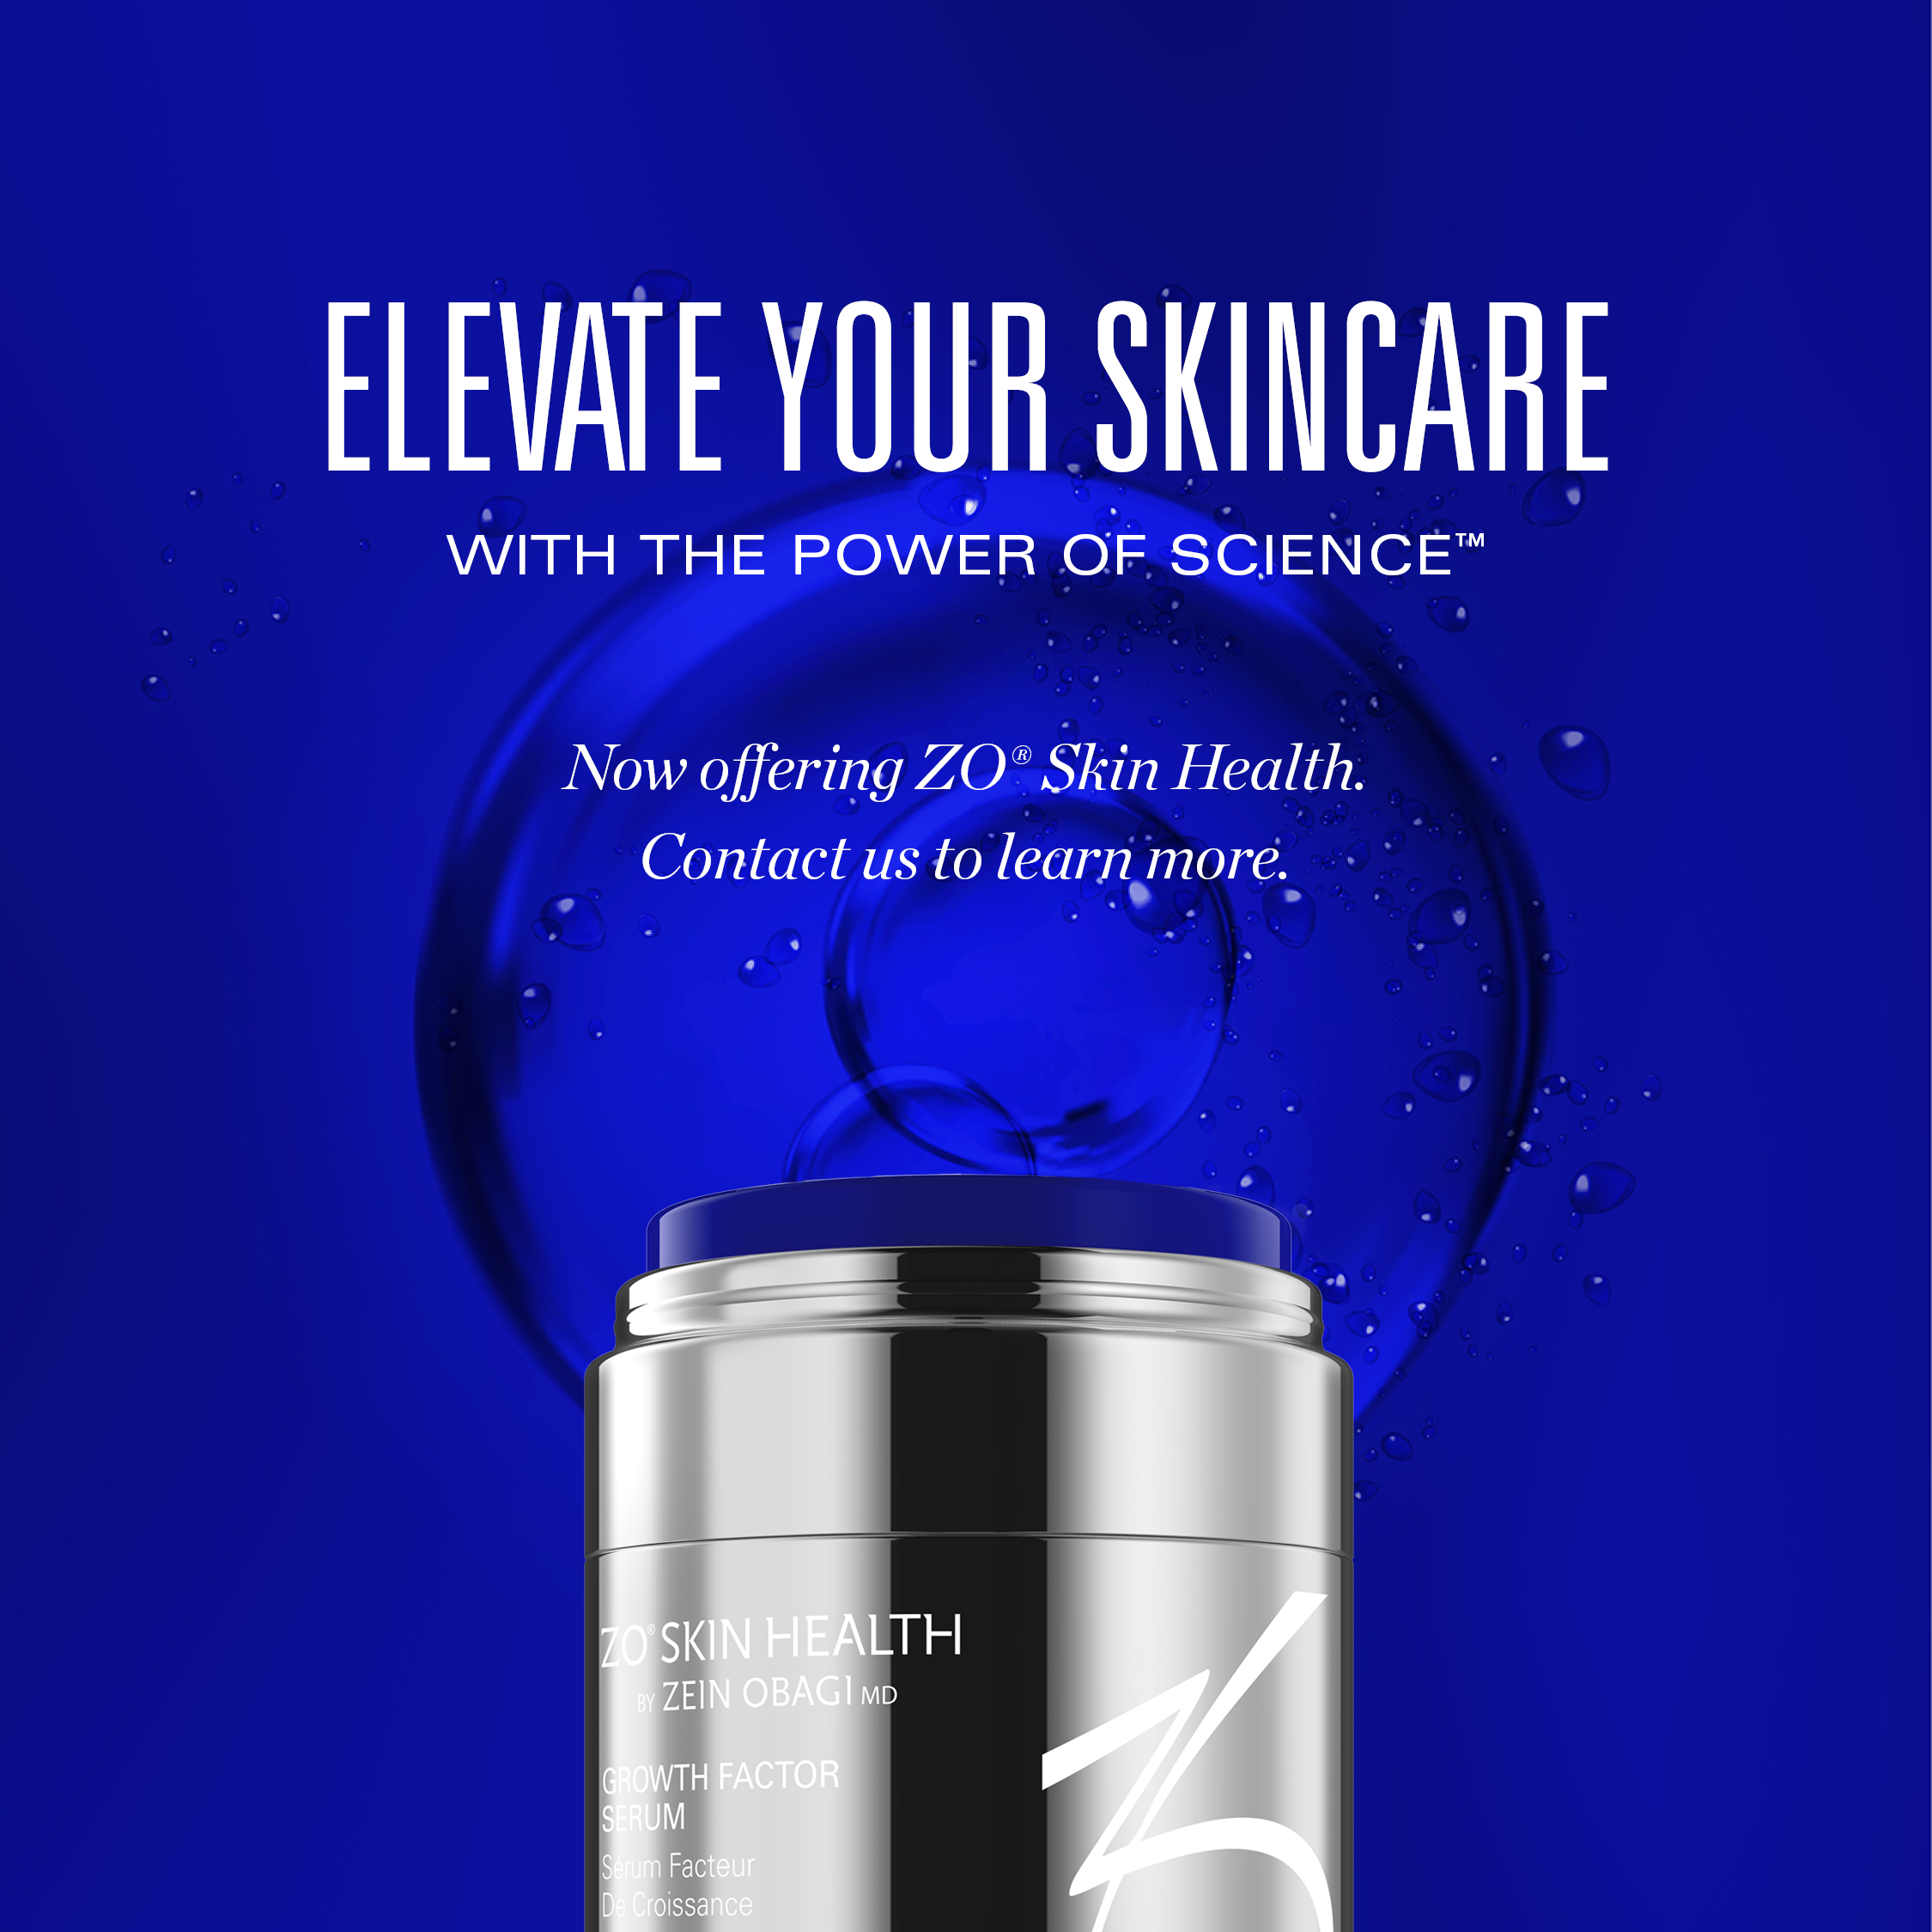 ZO Skin Health product promo image